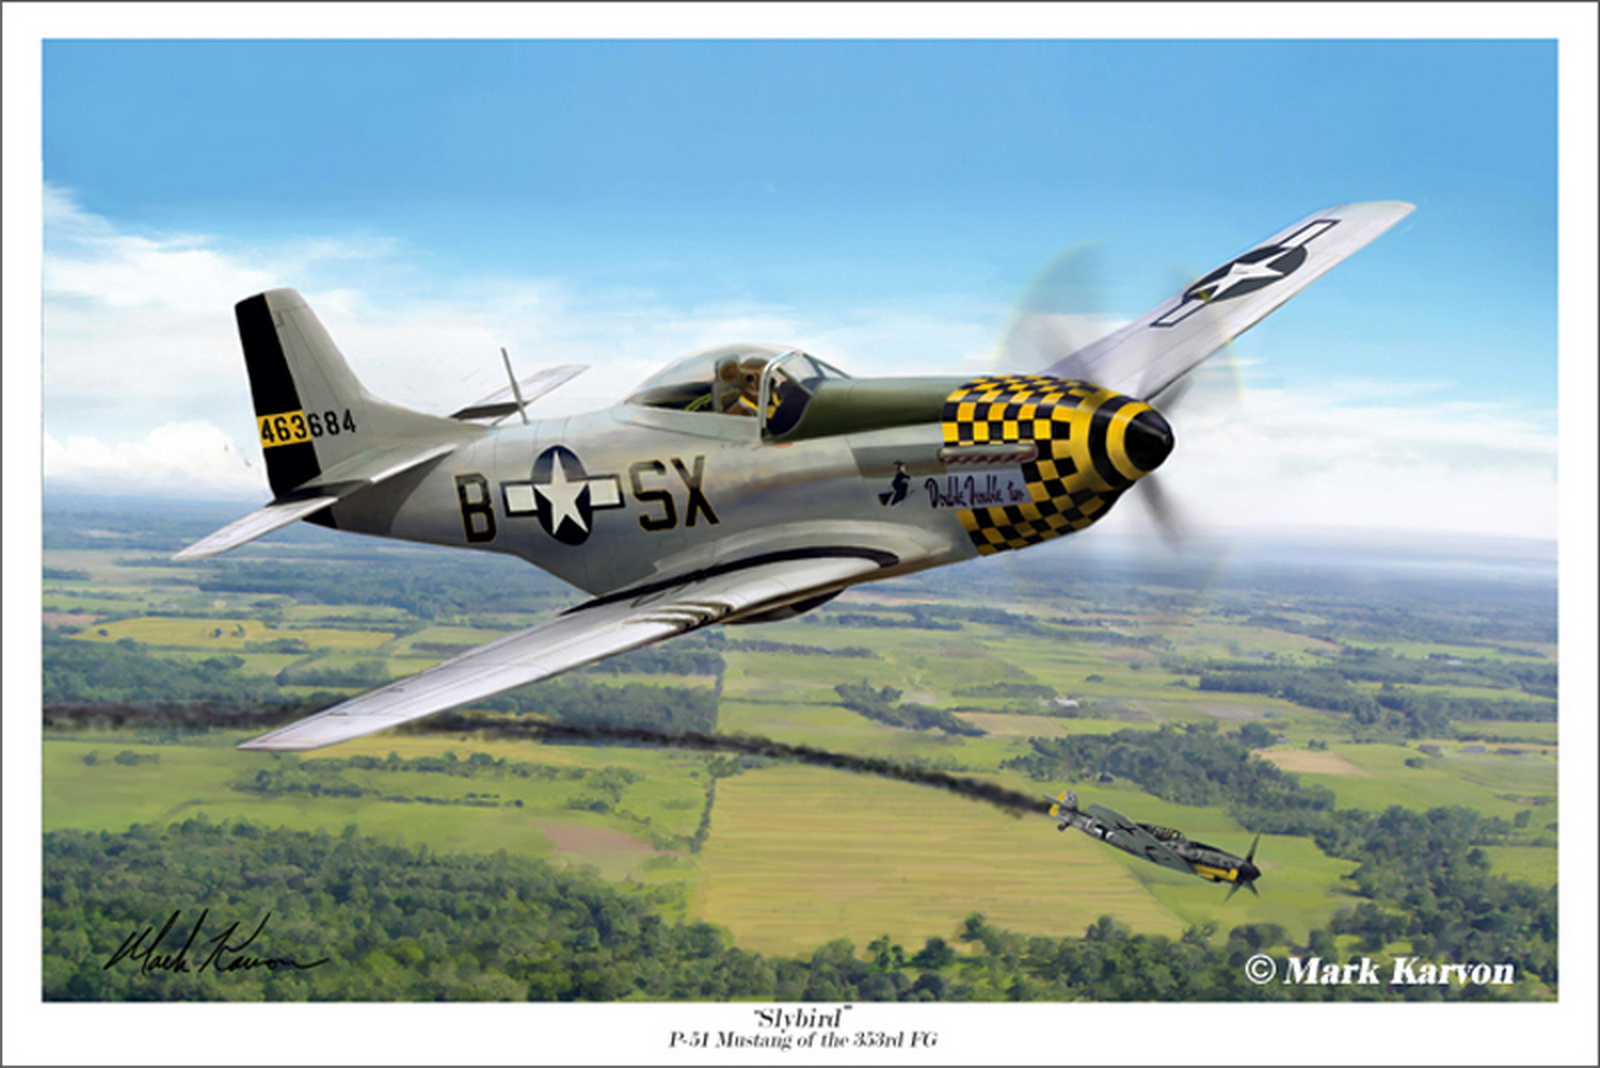 P_51_Mustang_of_the_353rd_FG_by_markkarvon.jpg